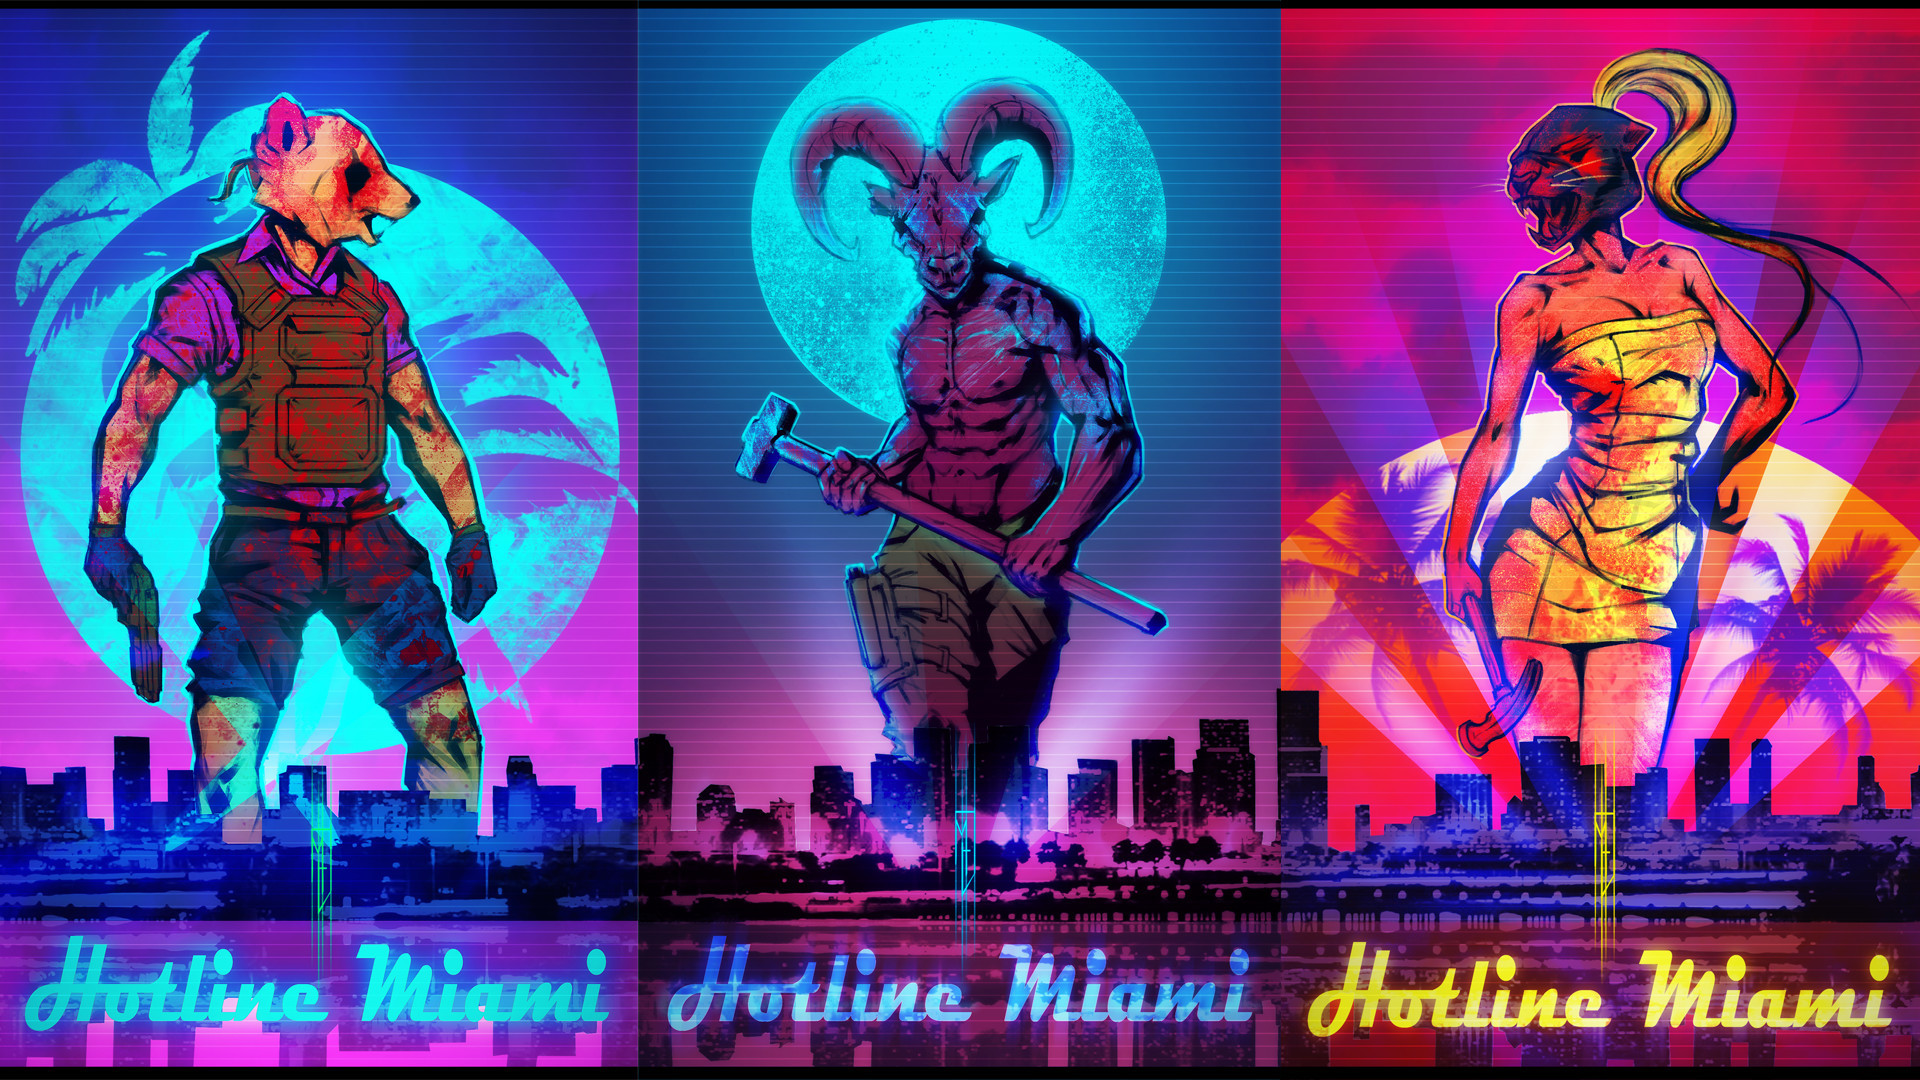 1920x1080 ArtStation - Hotline Miami fan art, Max Kiselyov